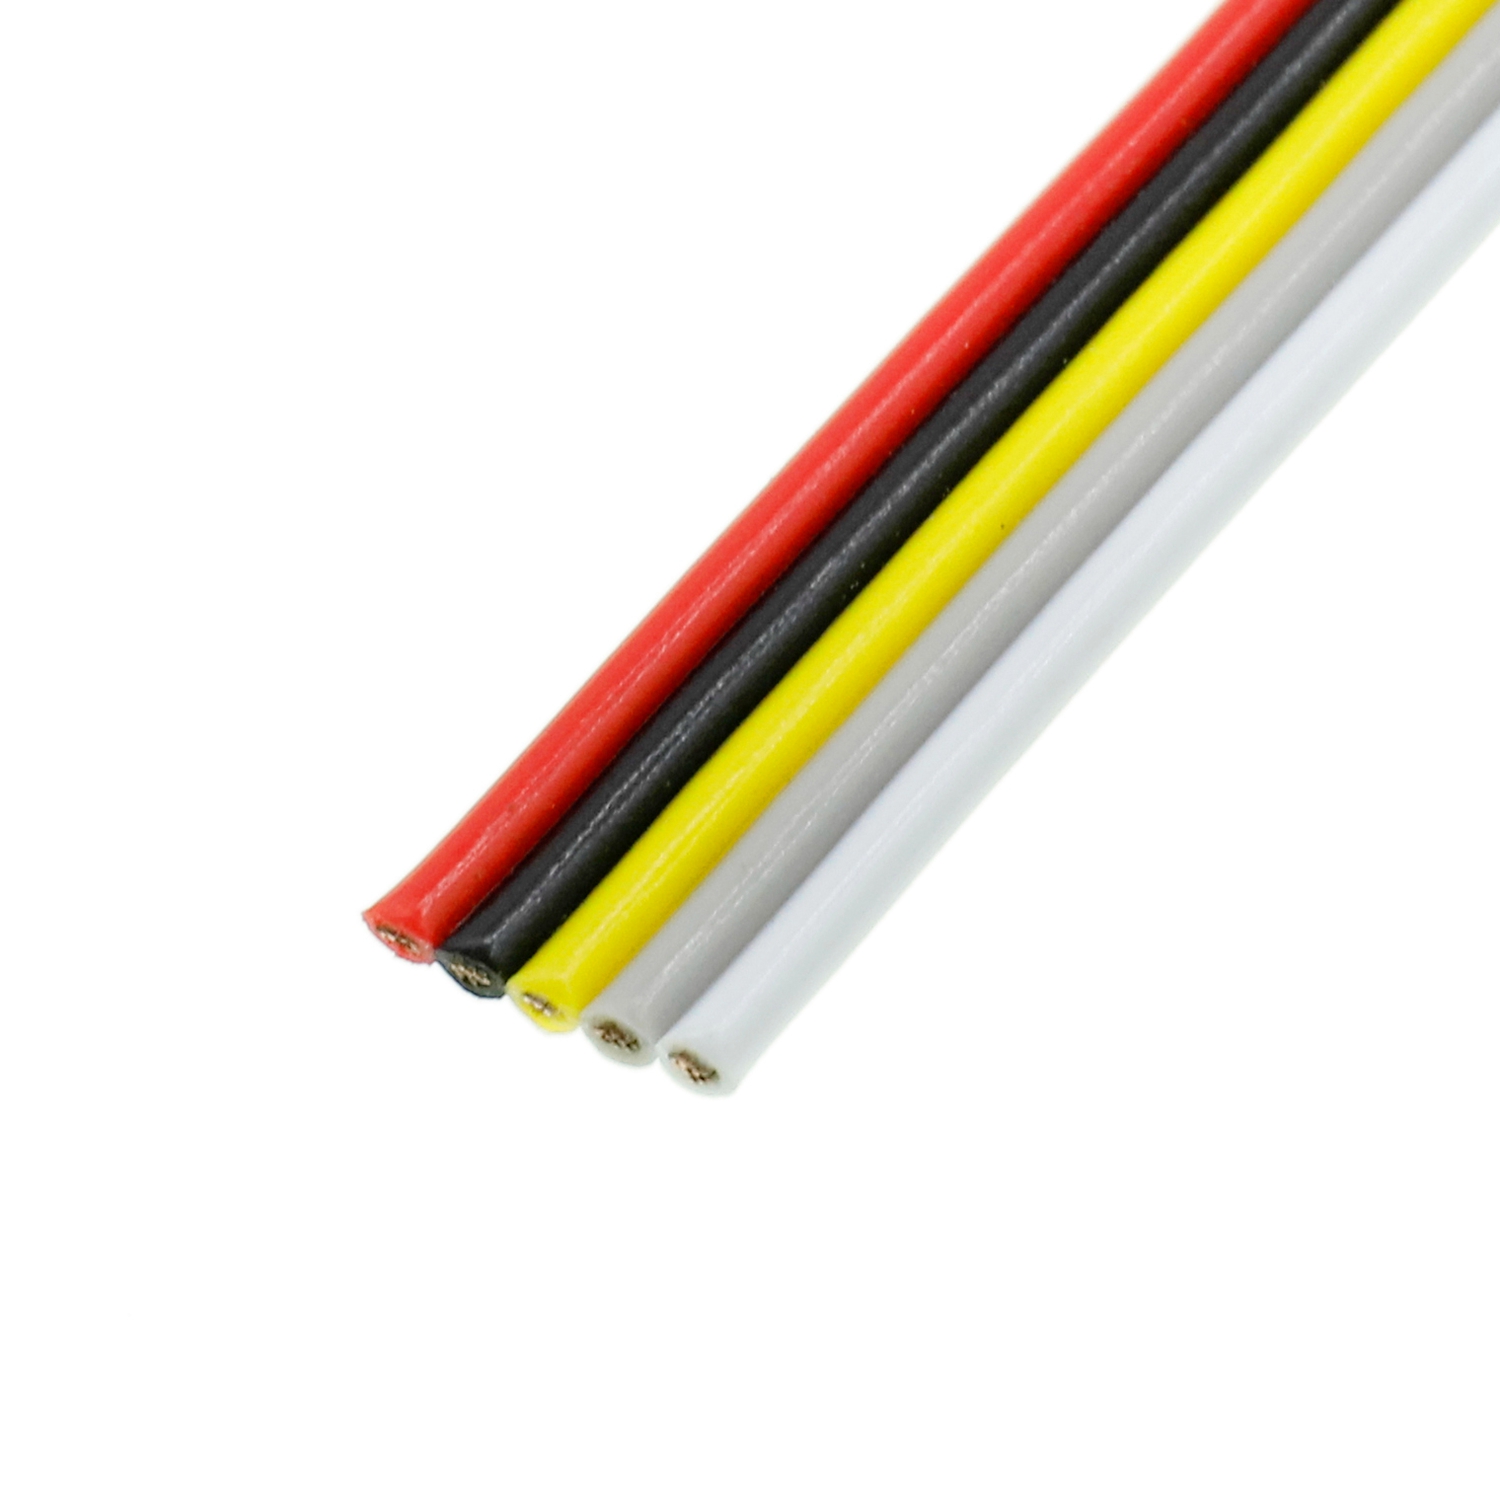 PVC Flat Ribbon Cable Customized UL1571 24AWG 5Core Lighting 